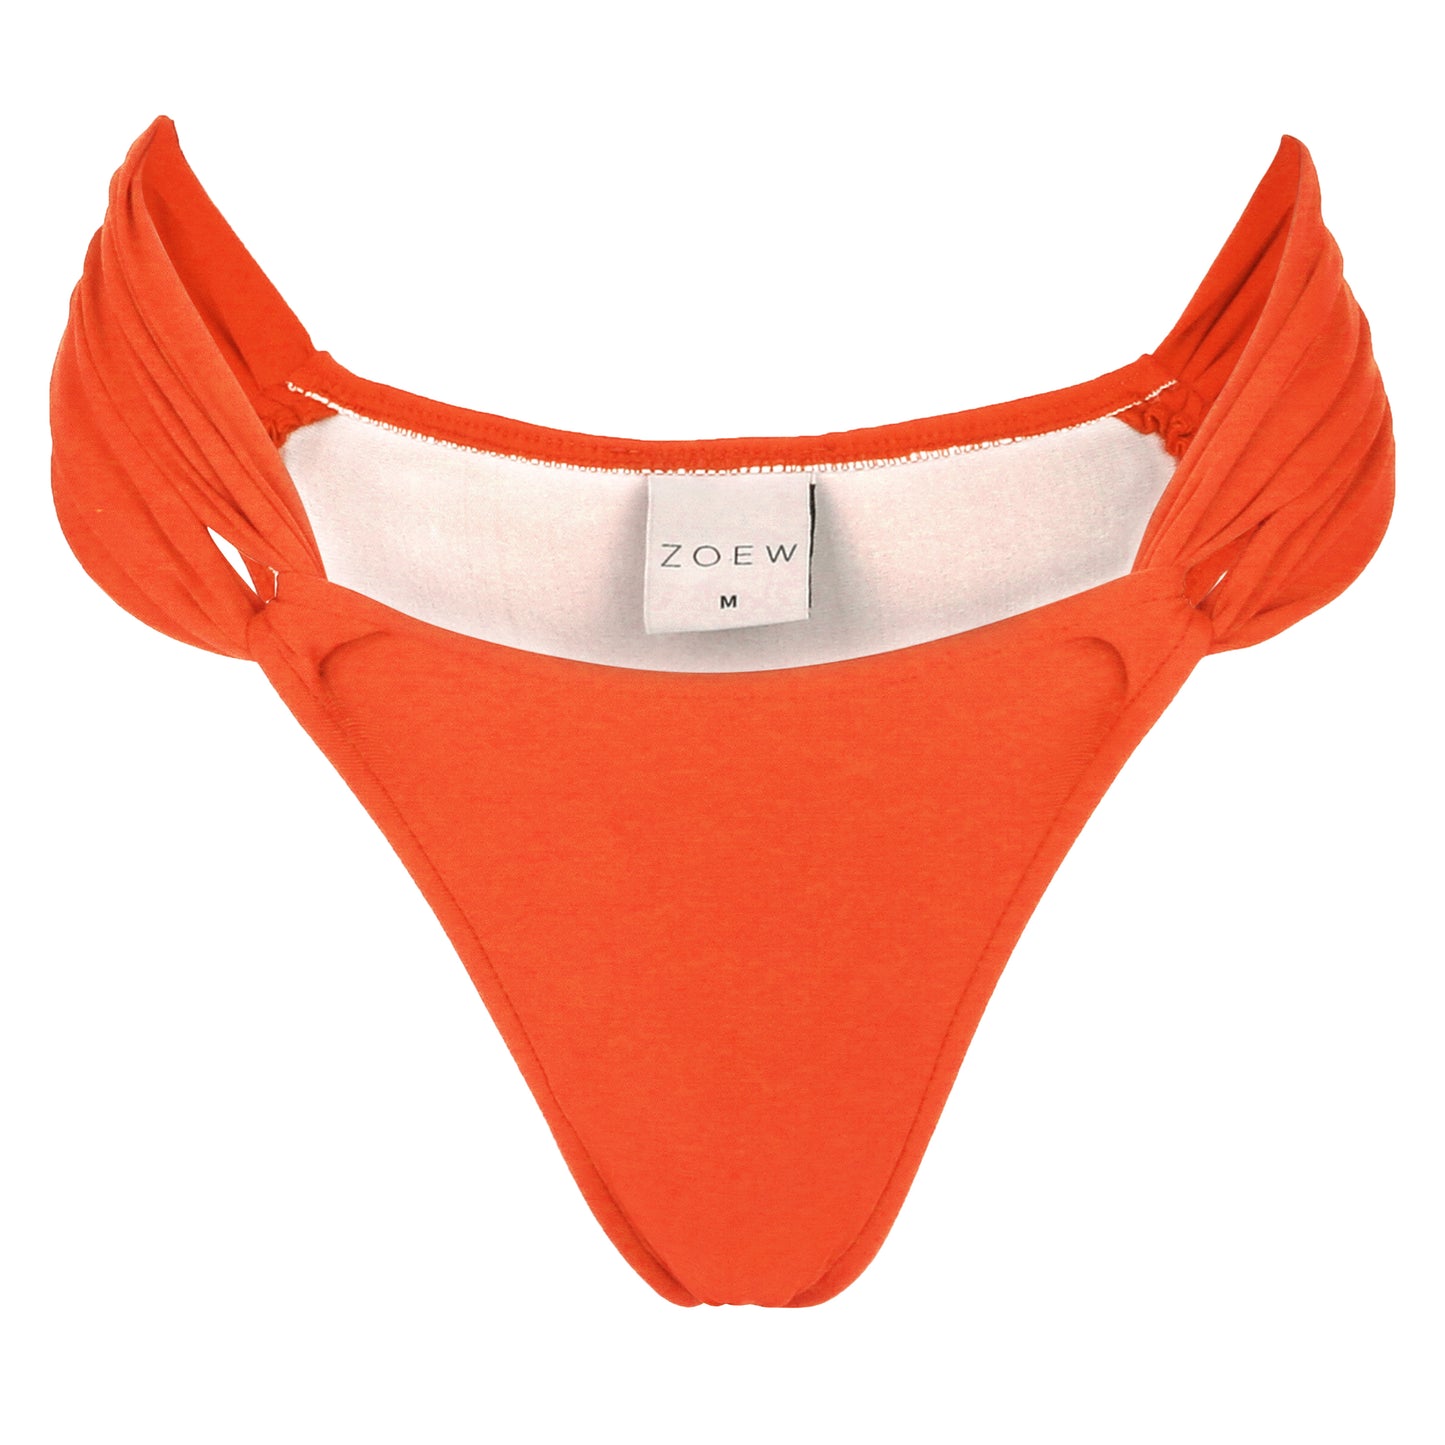 Loop Bikini Bottom in Orange